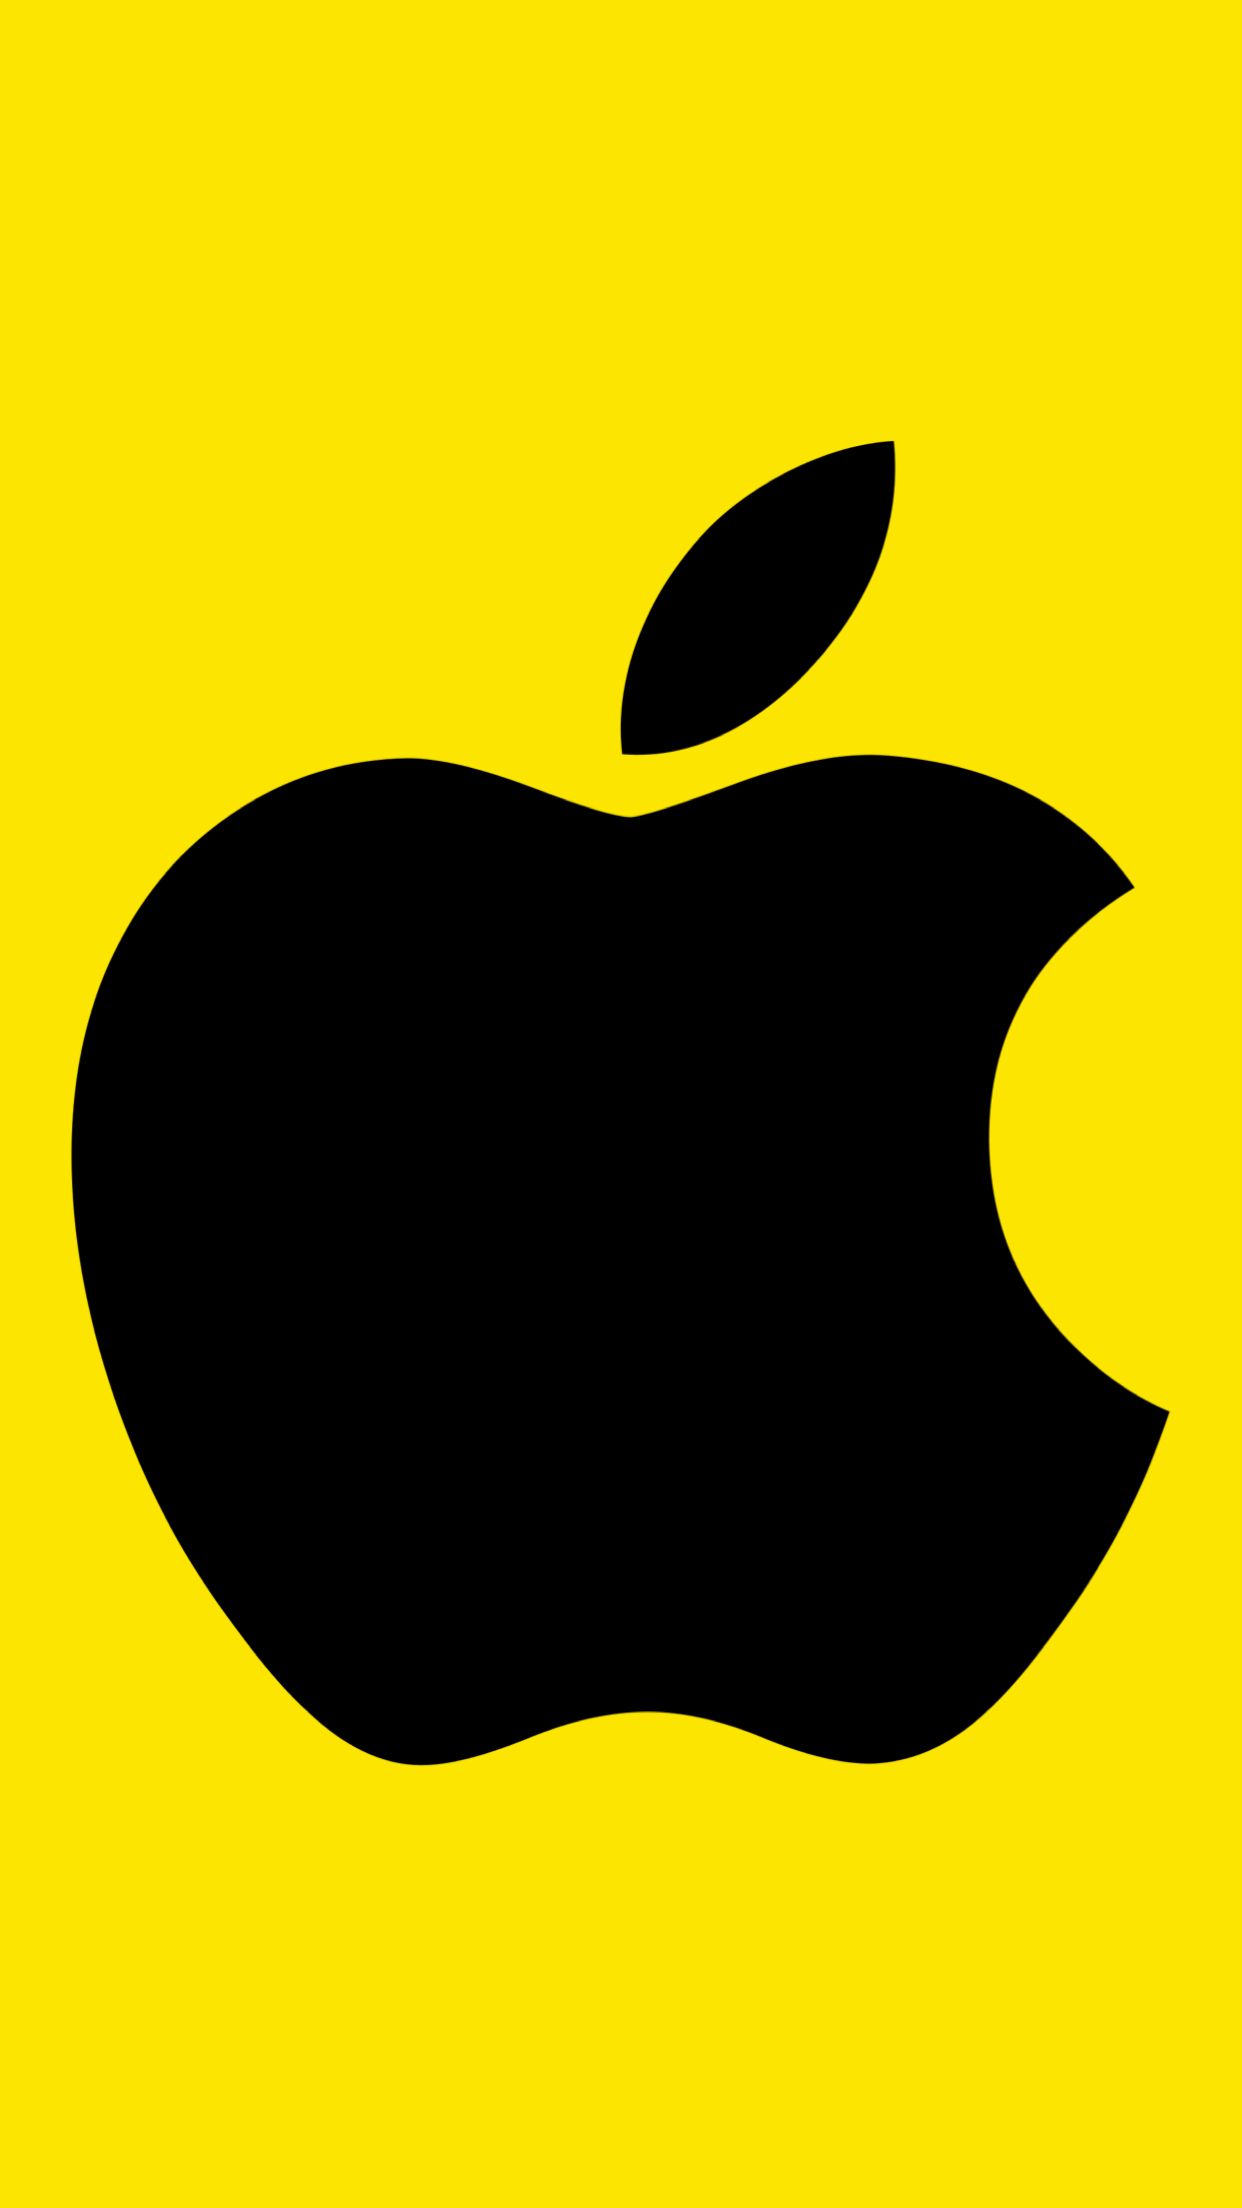 Yellow Apple logo wallpaper. Apple logo wallpaper iphone, iPhone wallpaper logo, iPhone wallpaper photo